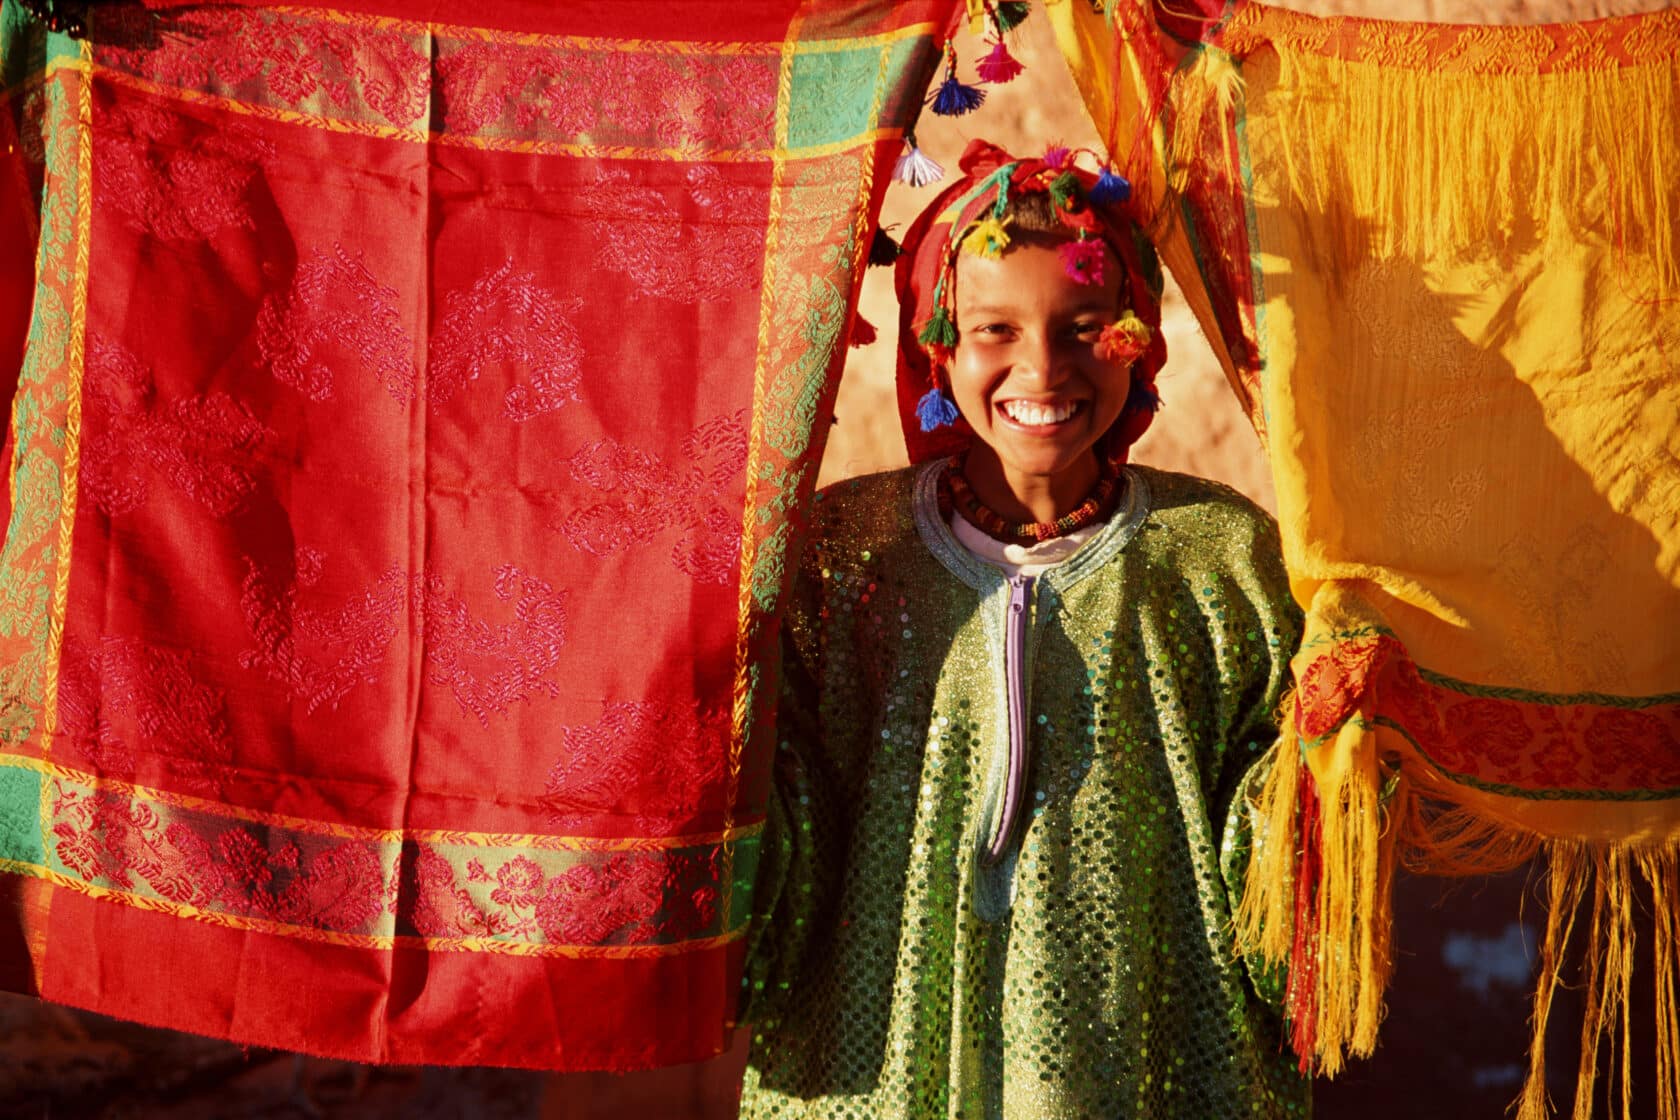 Morocco, Bedouin girl smiling, portrait